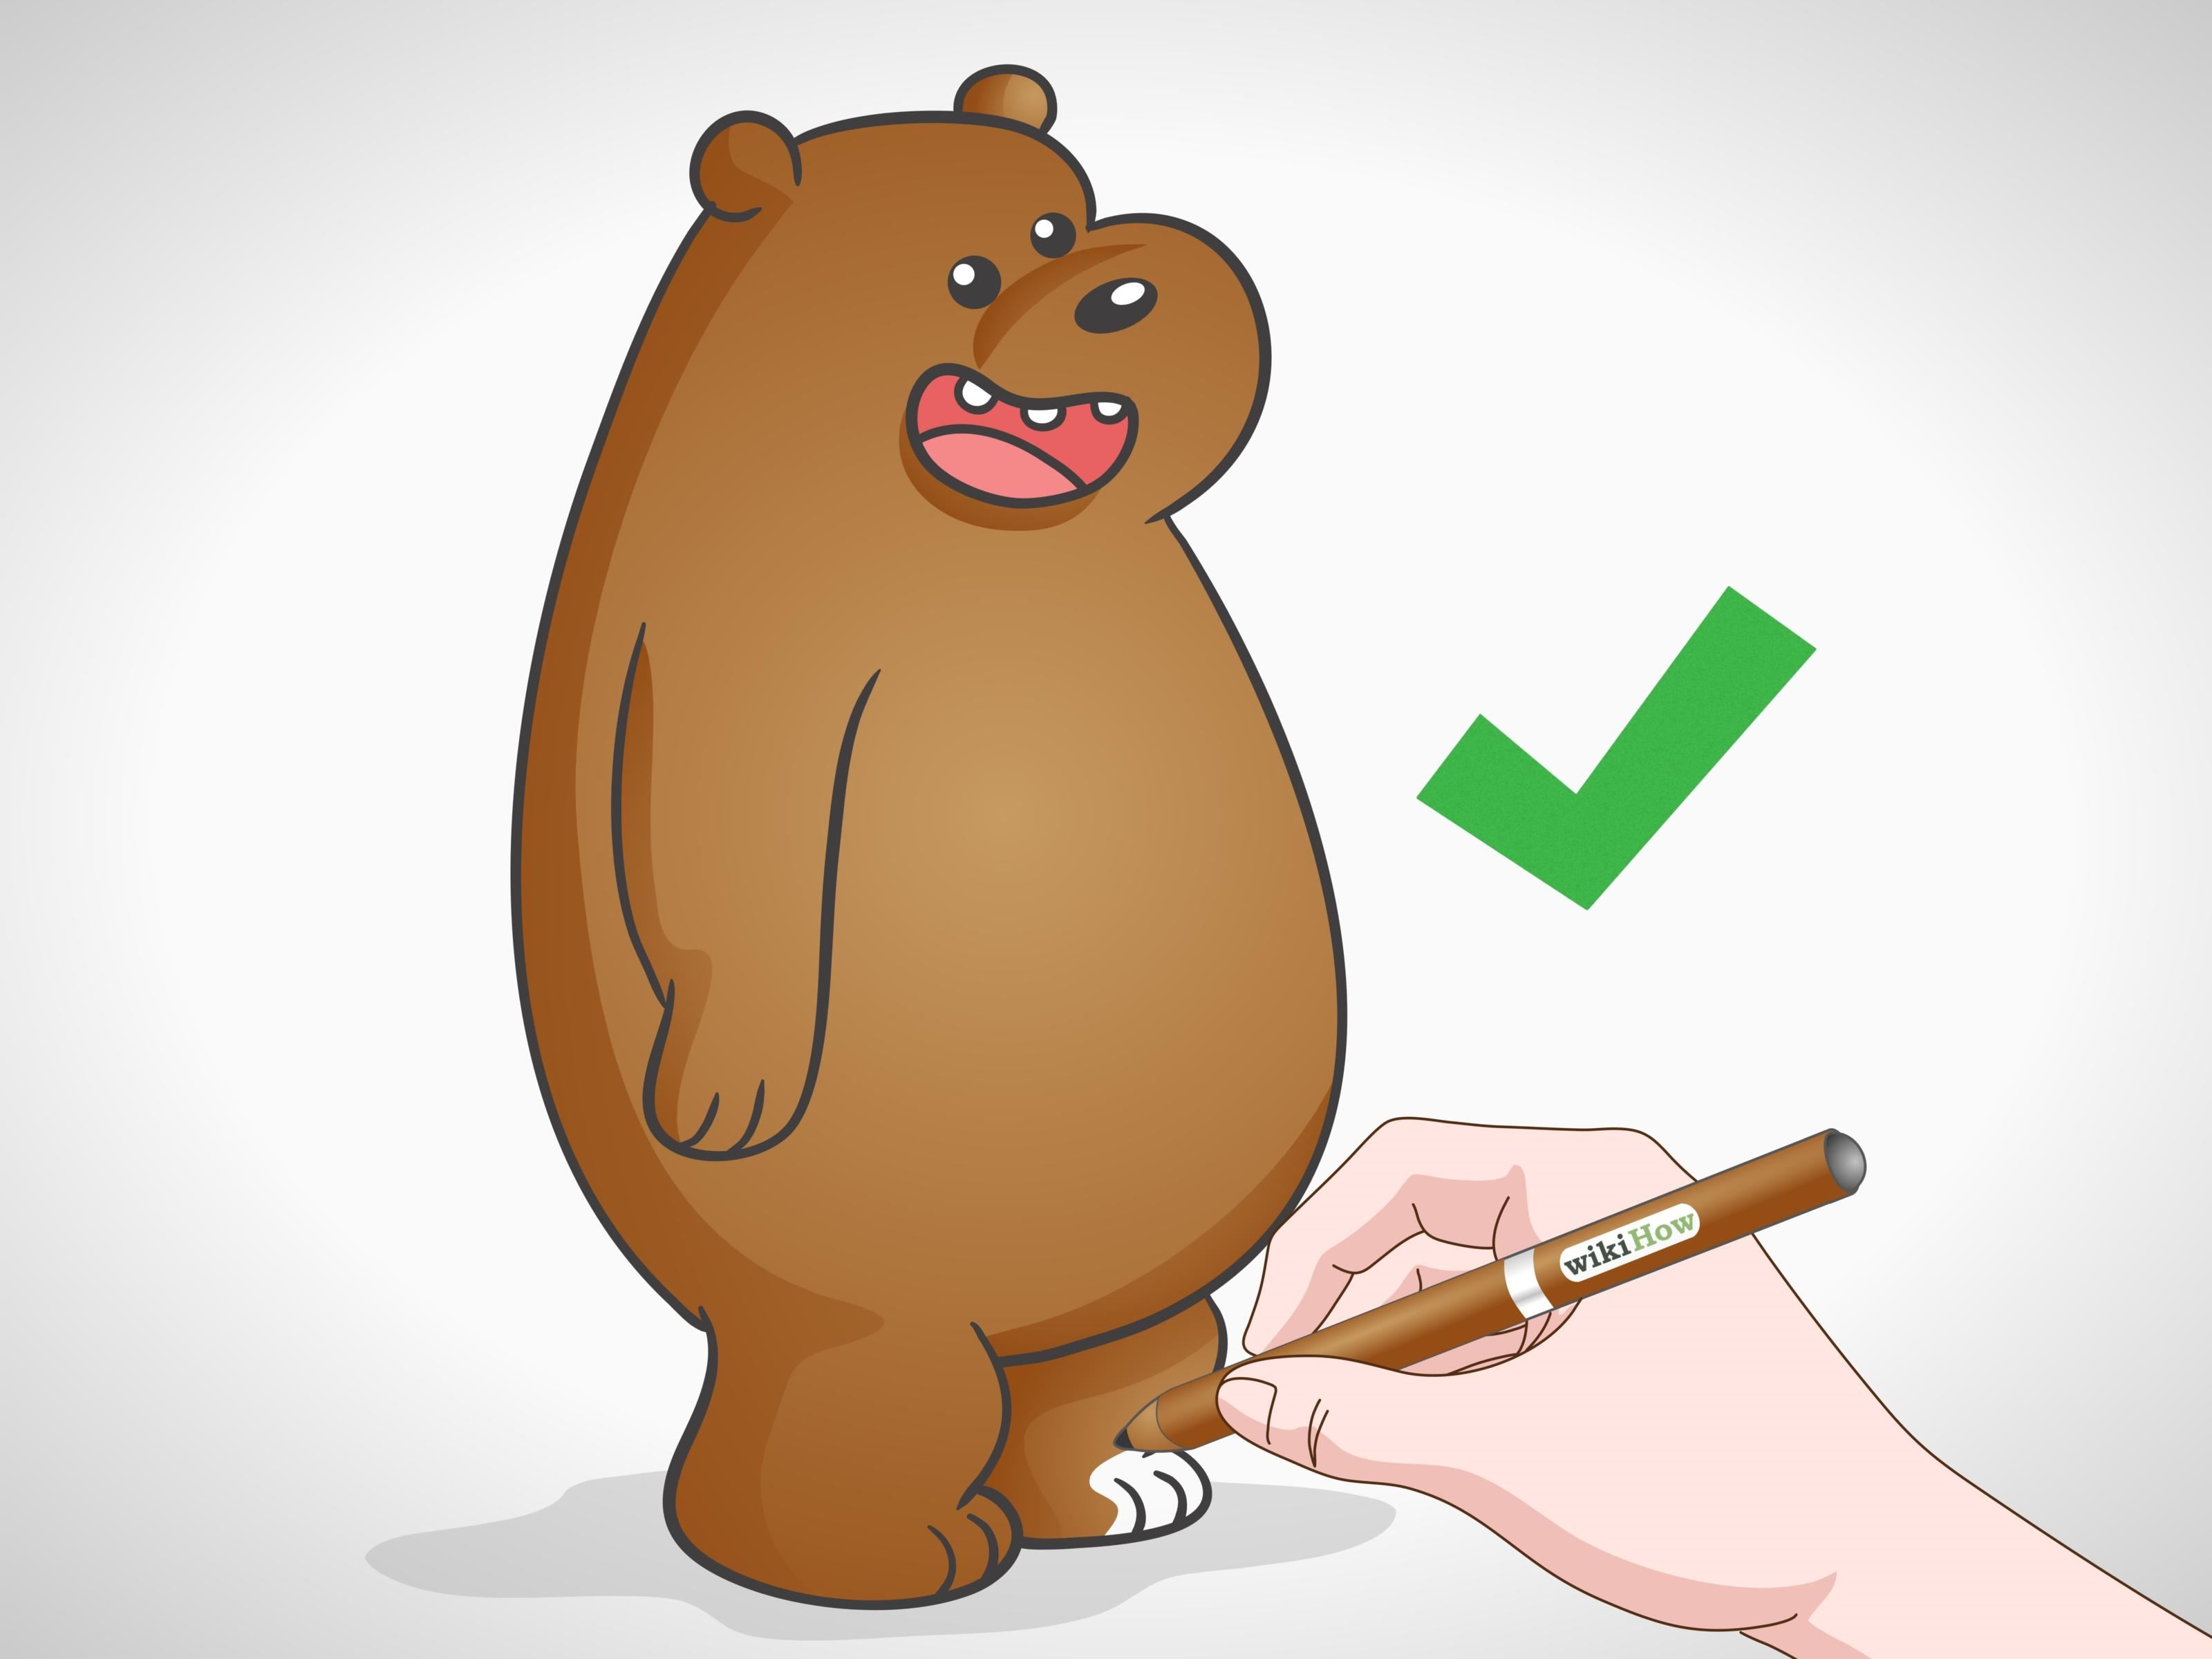 Drew born. Медведь рисунок. Нарисовать медведя. Медведь рисунок карандашом. Медвежонок для рисования.